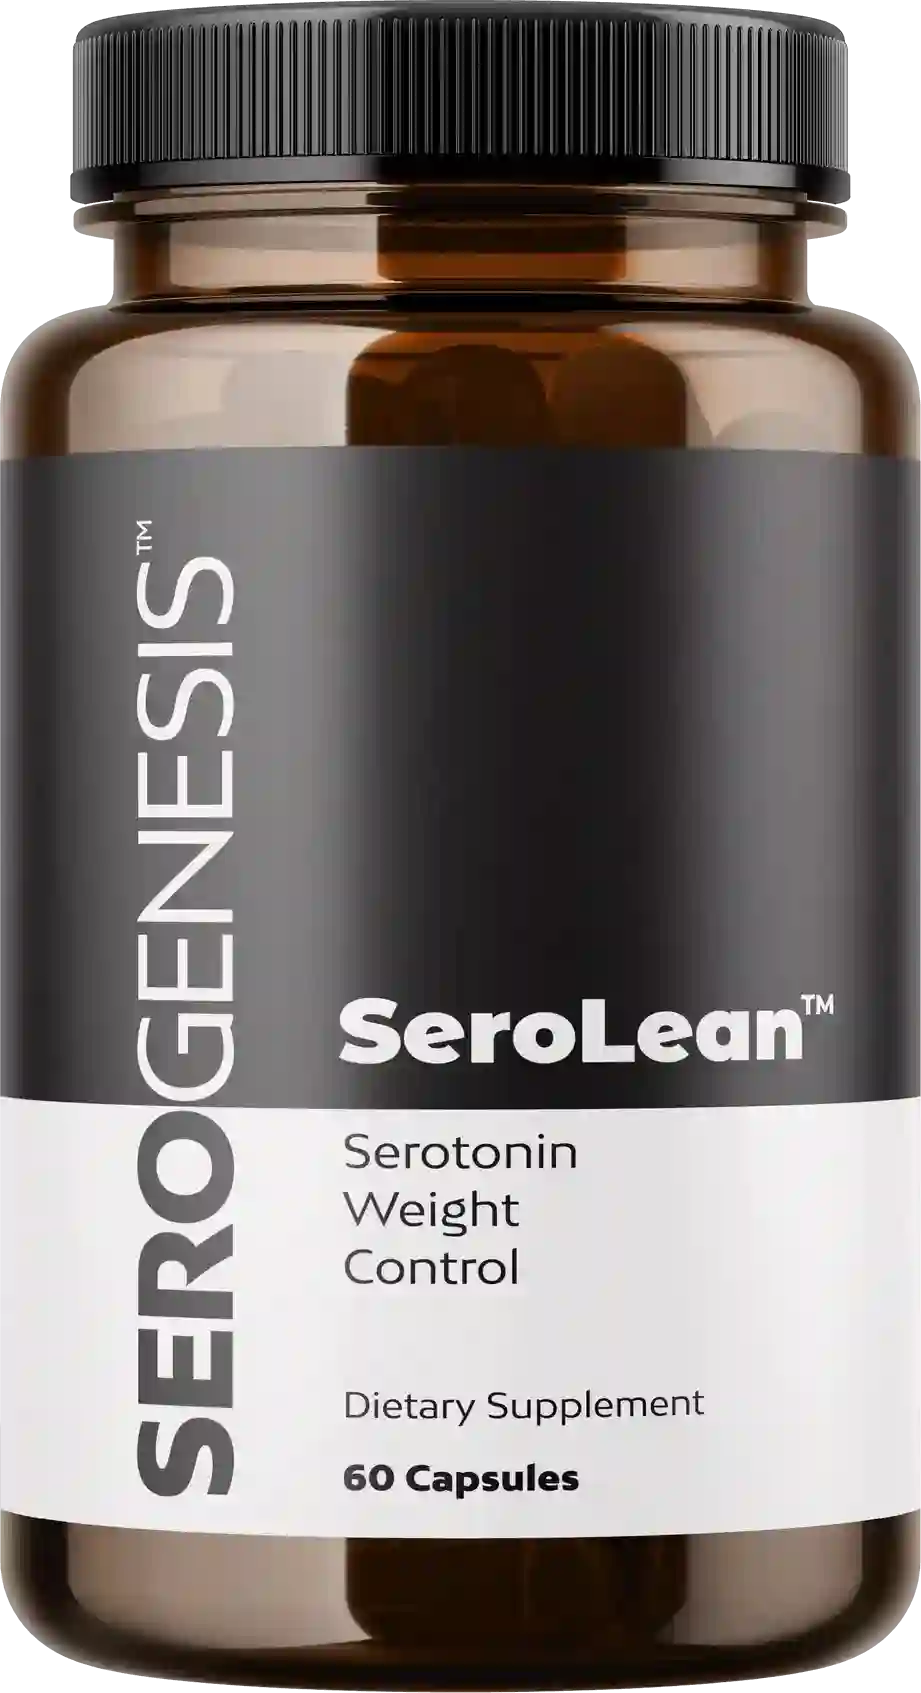 1 month 1 bottle - Serolean Supplement 